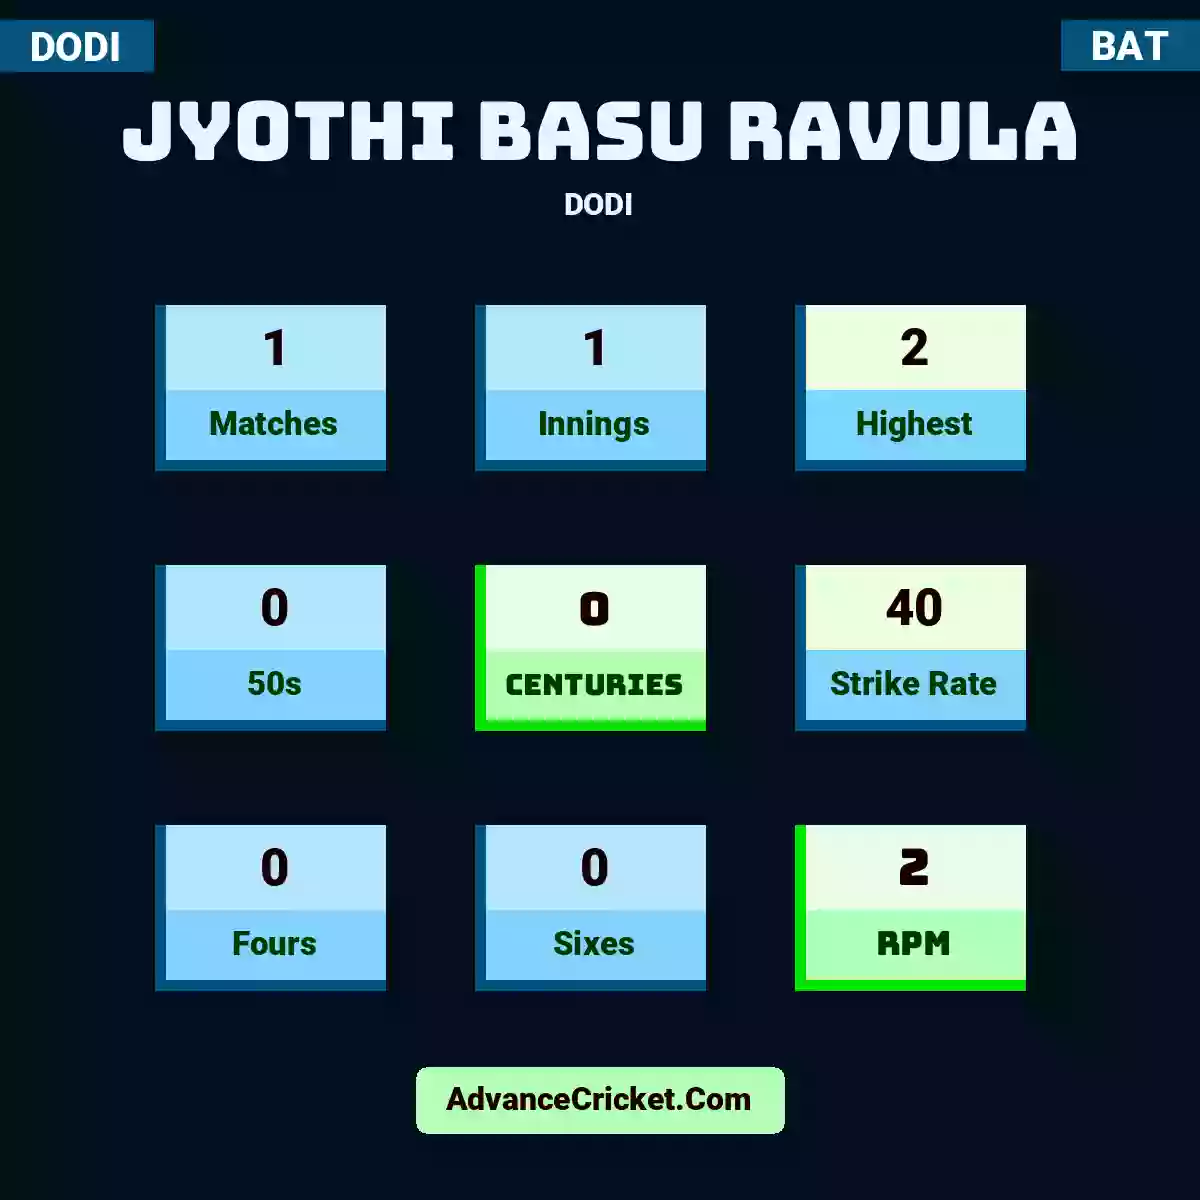 Jyothi Basu Ravula DODI , Jyothi Basu Ravula played 1 matches, scored 2 runs as highest, 0 half-centuries, and 0 centuries, with a strike rate of 40. J.Basu.Ravula hit 0 fours and 0 sixes, with an RPM of 2.